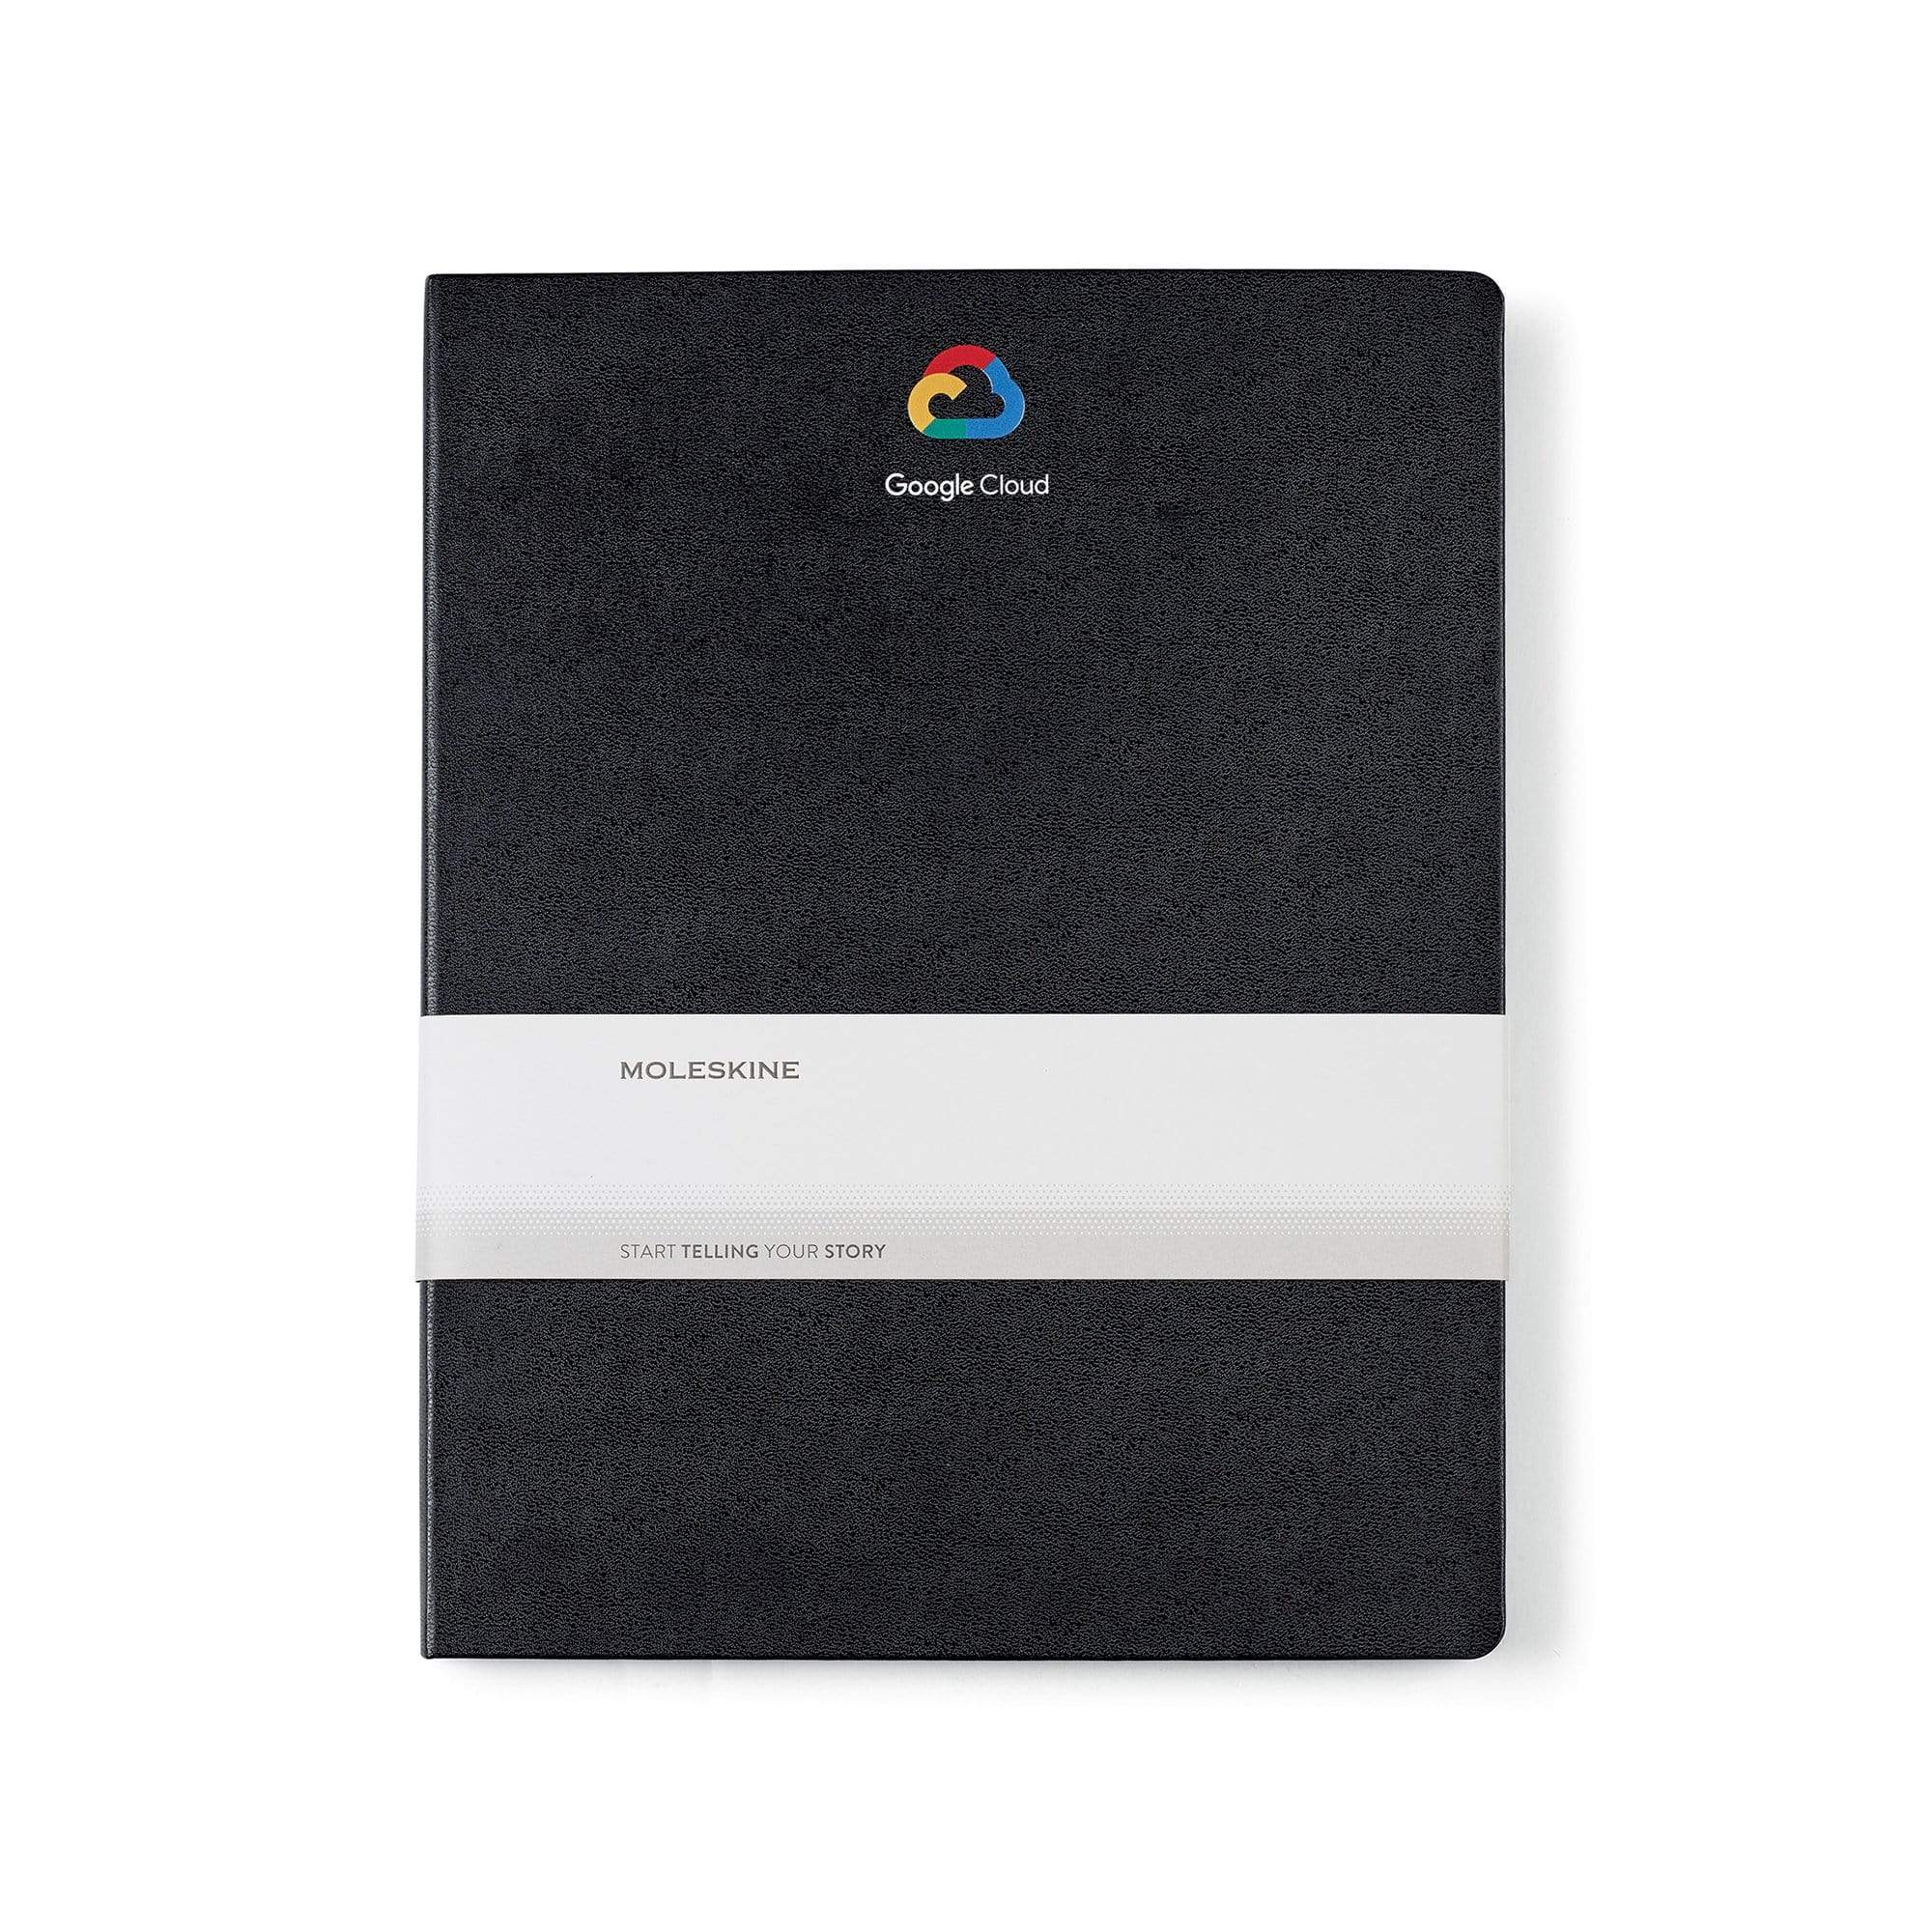 Moleskine Accessories One Size / Black Moleskine - Hard Cover Ruled Extra-Extra Large Notebook (8.6" x 11.25")